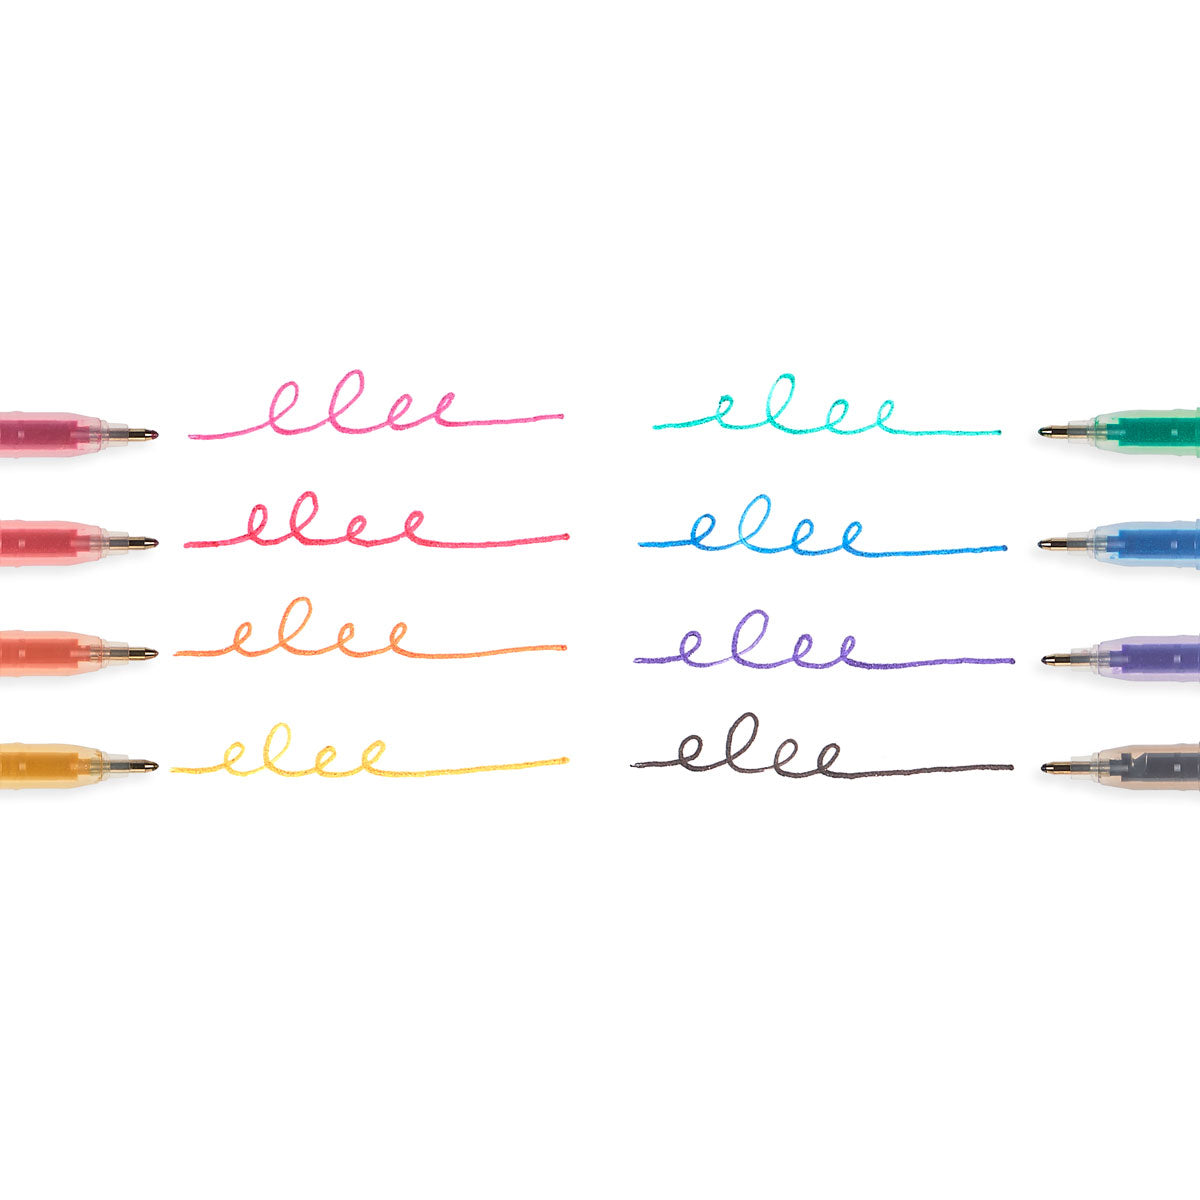 Color Write Colored Fountain Pens - Allison Wonderland Toys & Games